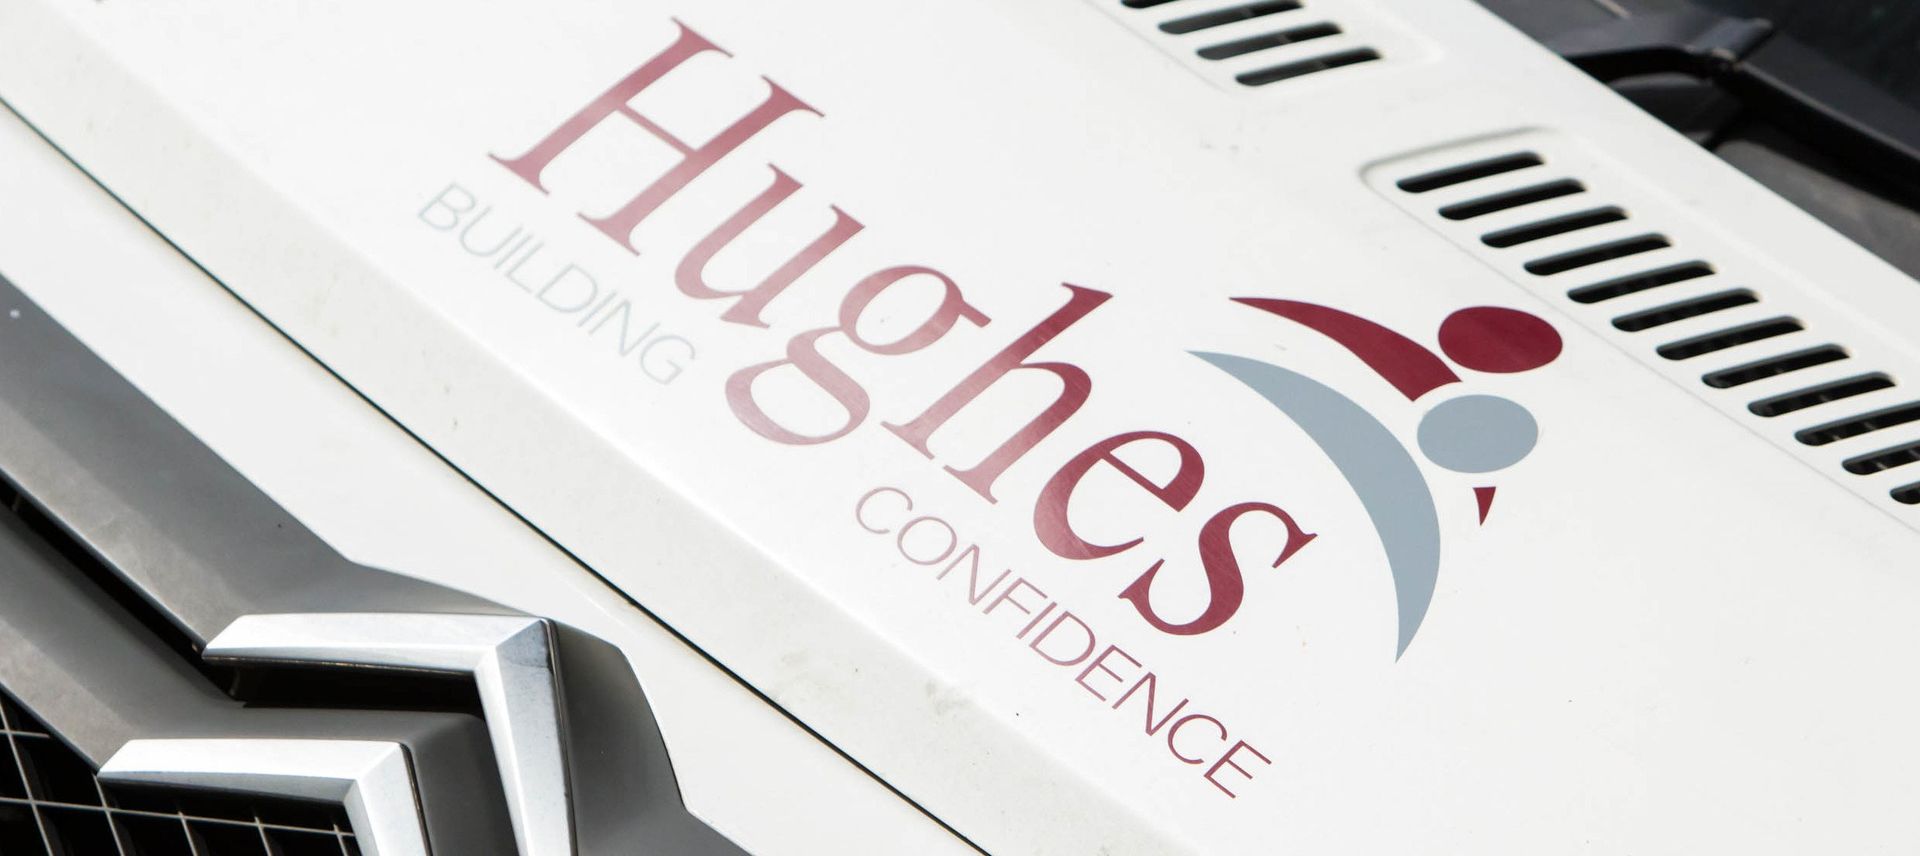 Hughes - Building Confidence